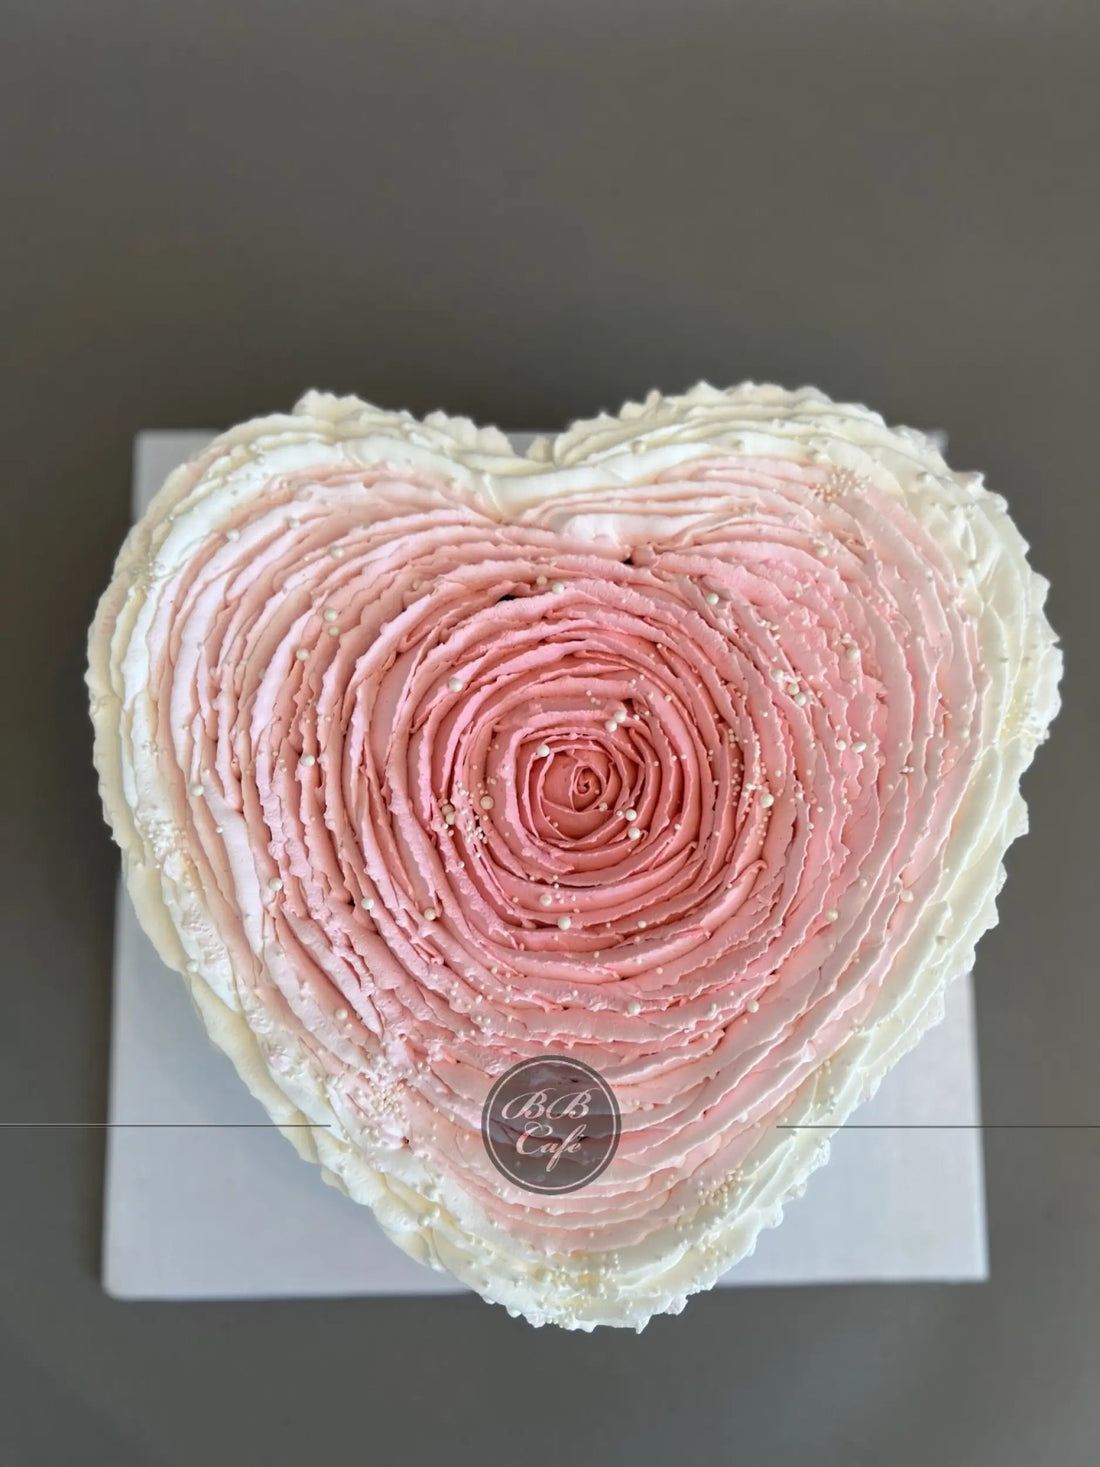 Hand piped ruffled rose on whipped cream heart - custom cake